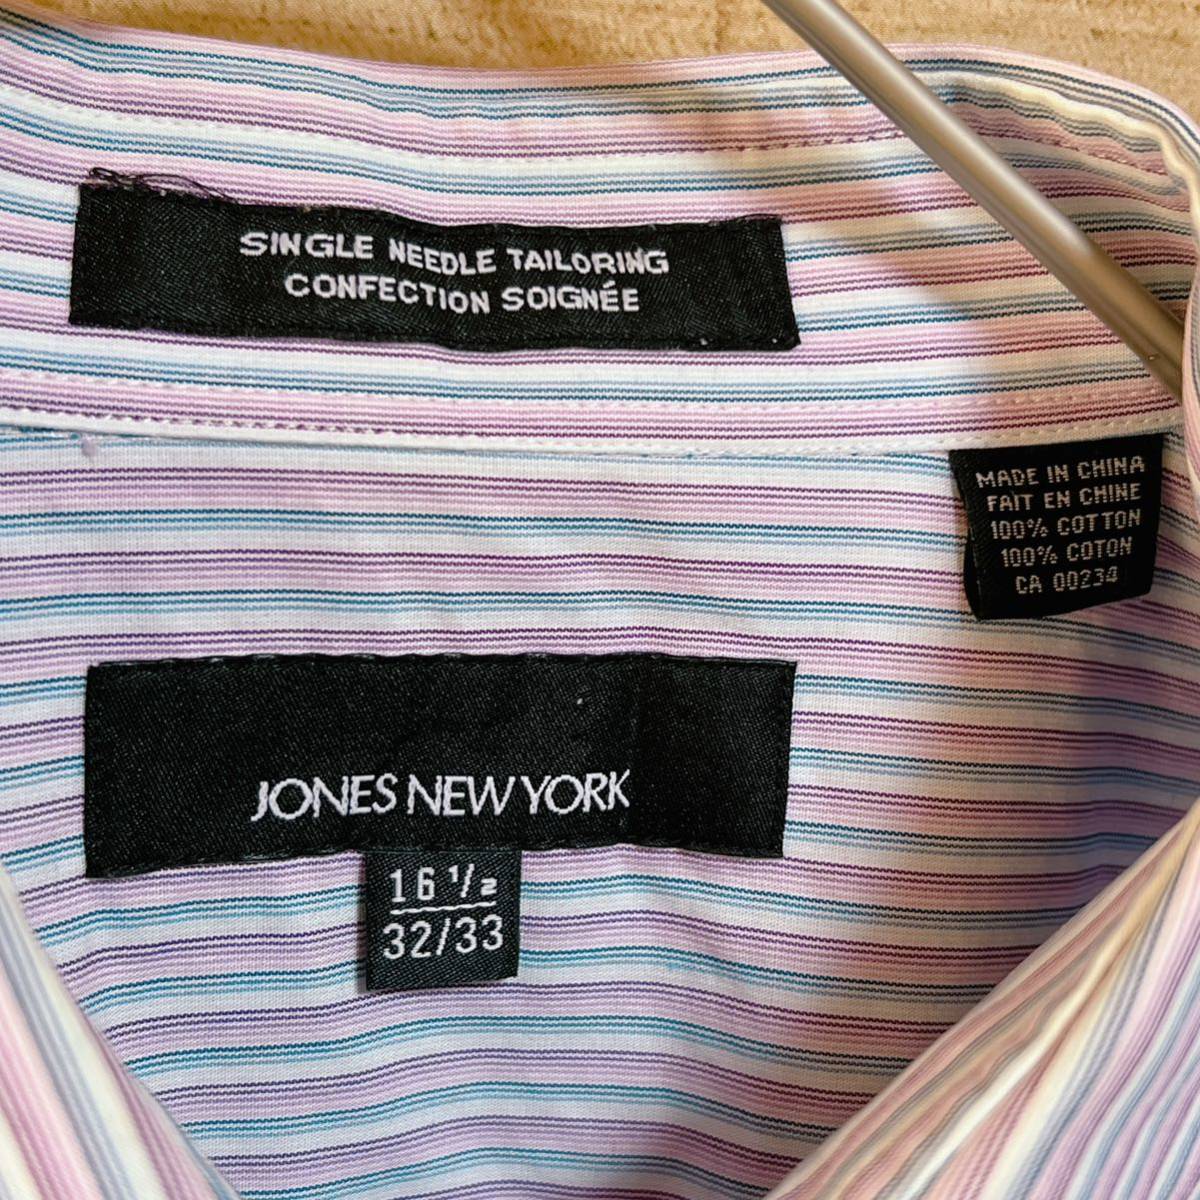 JONES NEW YORK ジョーンズニューヨーク長袖シャツ ストライプシャツ サイズ16 1/2-32/33の画像3